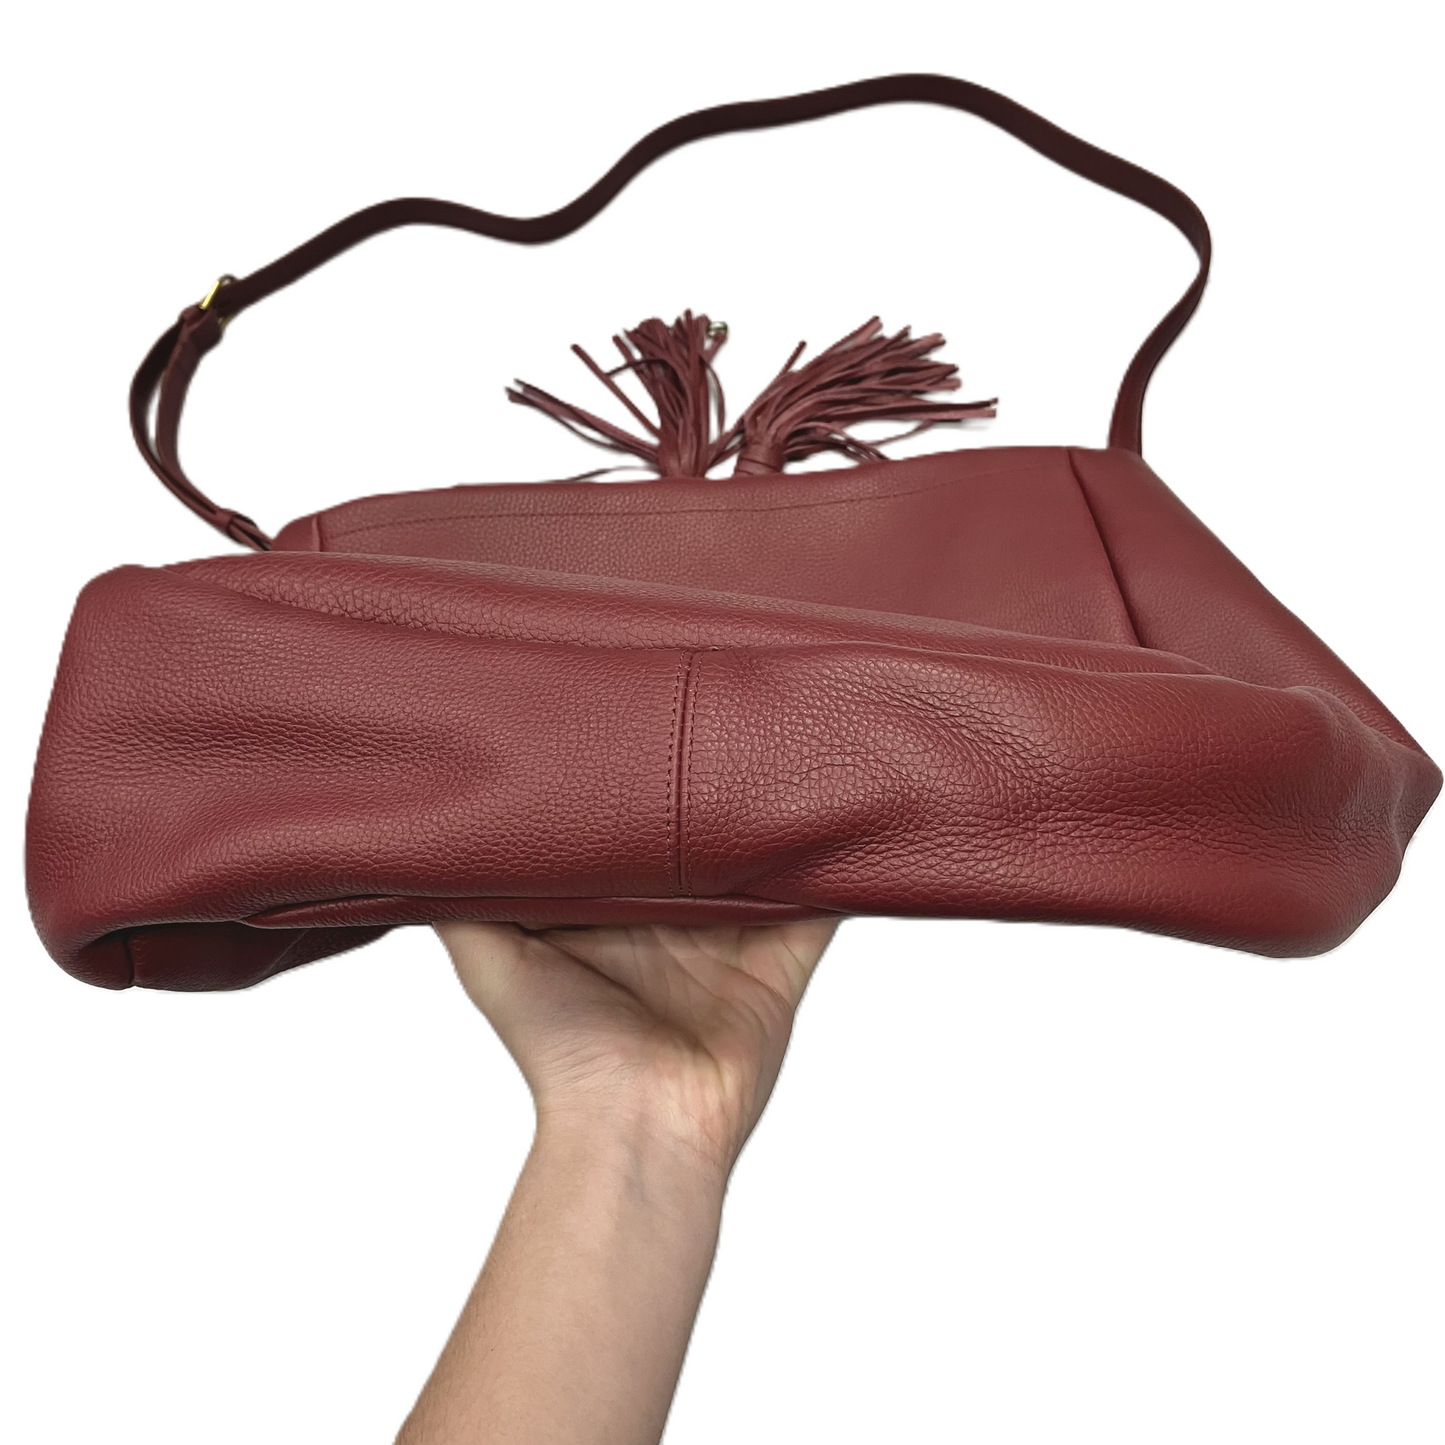 Handbag Leather By Etienne Aigner  Size: Large